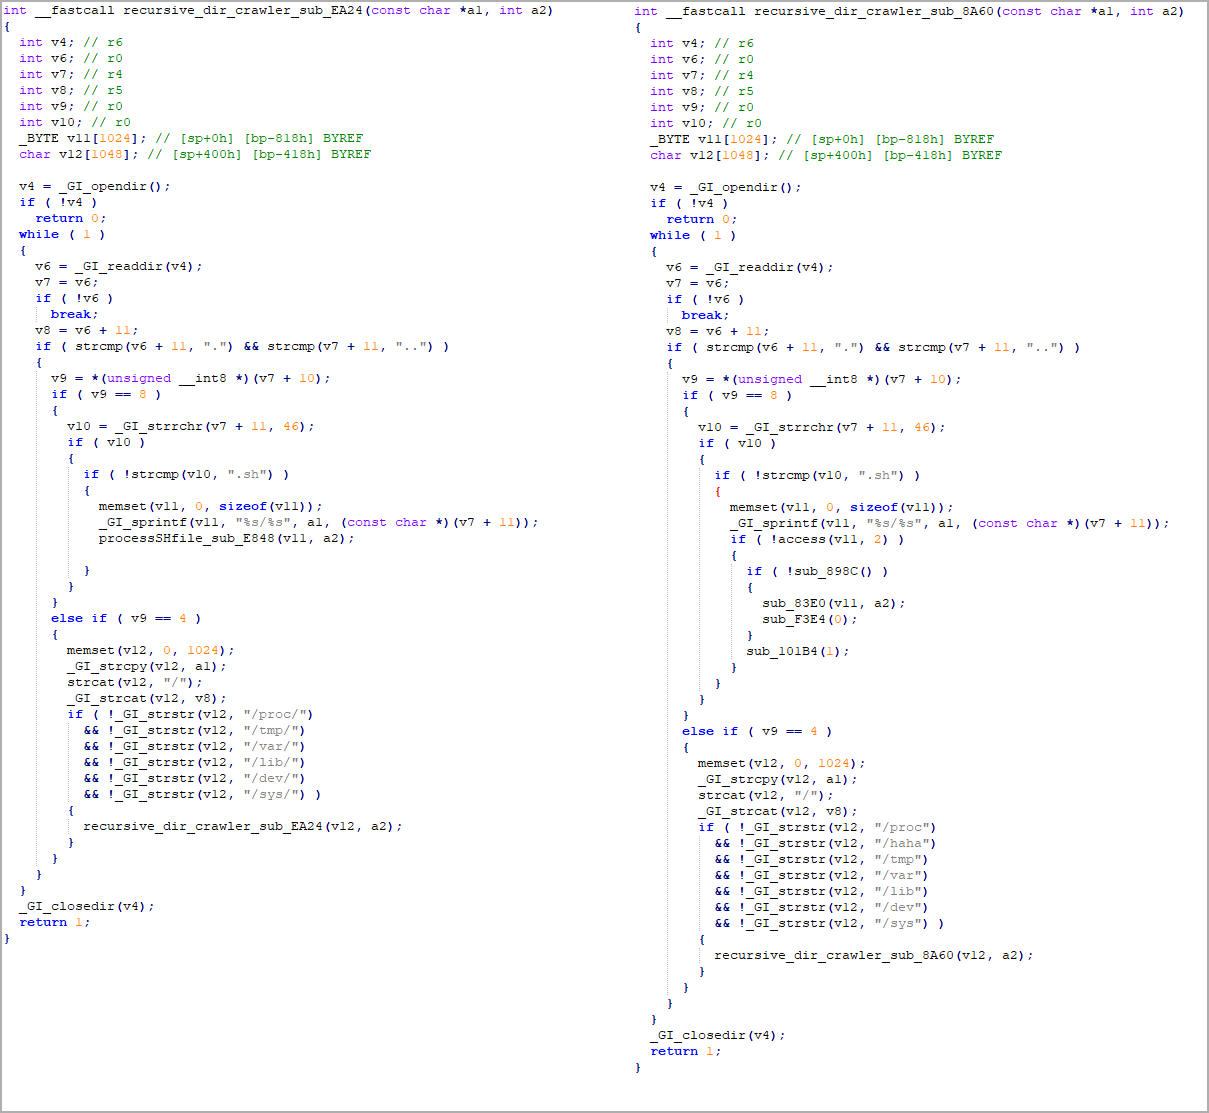 Original Mozi codification (left) and termination move payload (right)